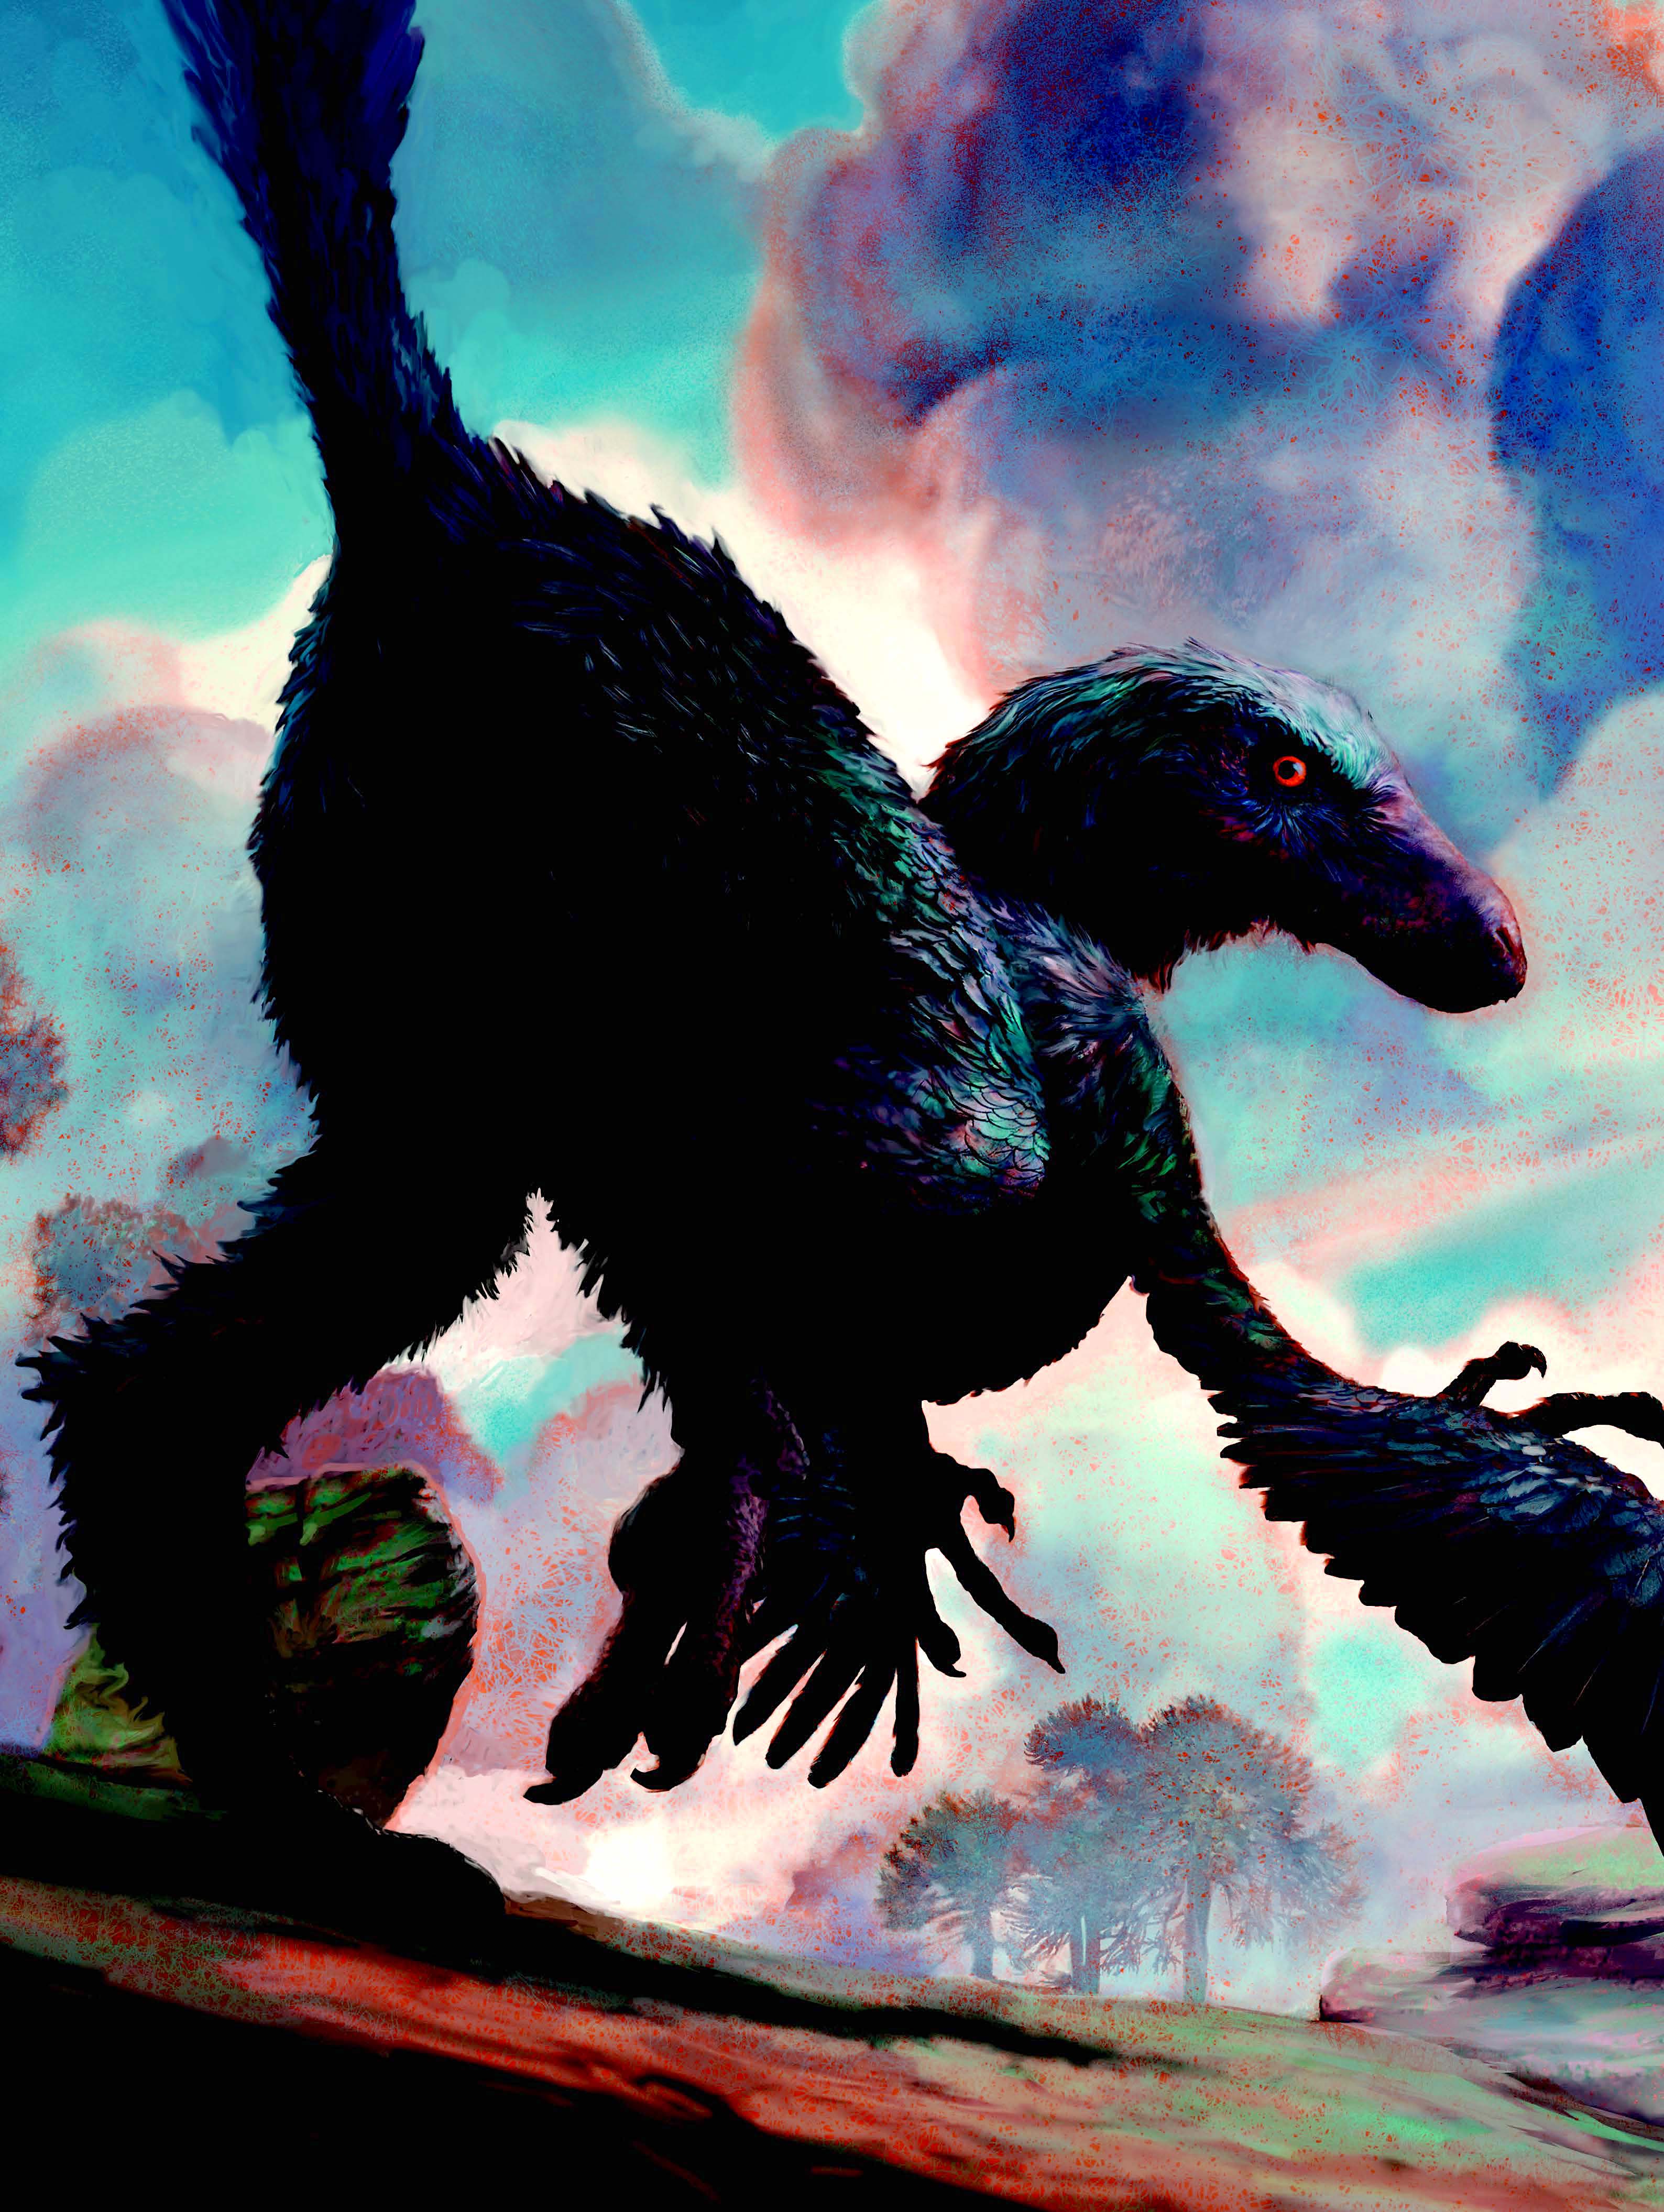 Feathered dinosaur shows birdlike traits—and a predator's gaze. January 2017.